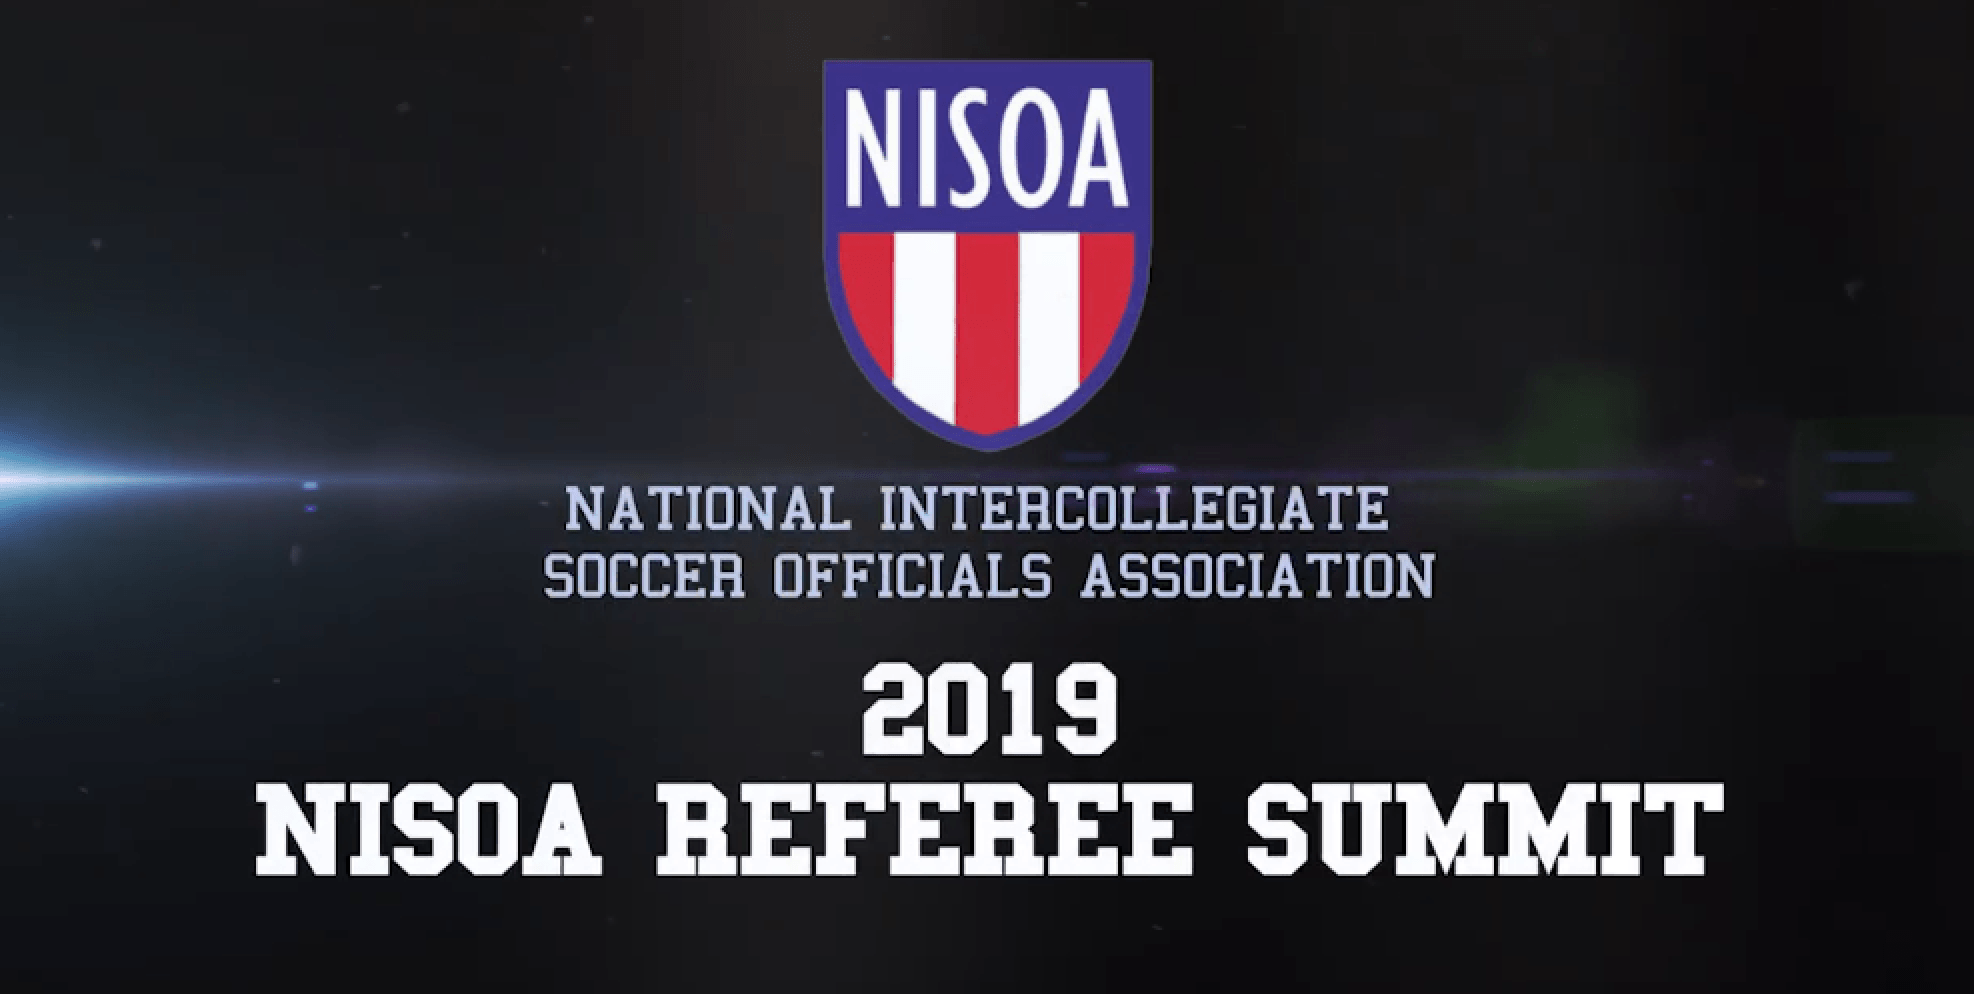 NISOA Logo - Summary of the 2019 NISOA Referee Summit National Intercollegiate